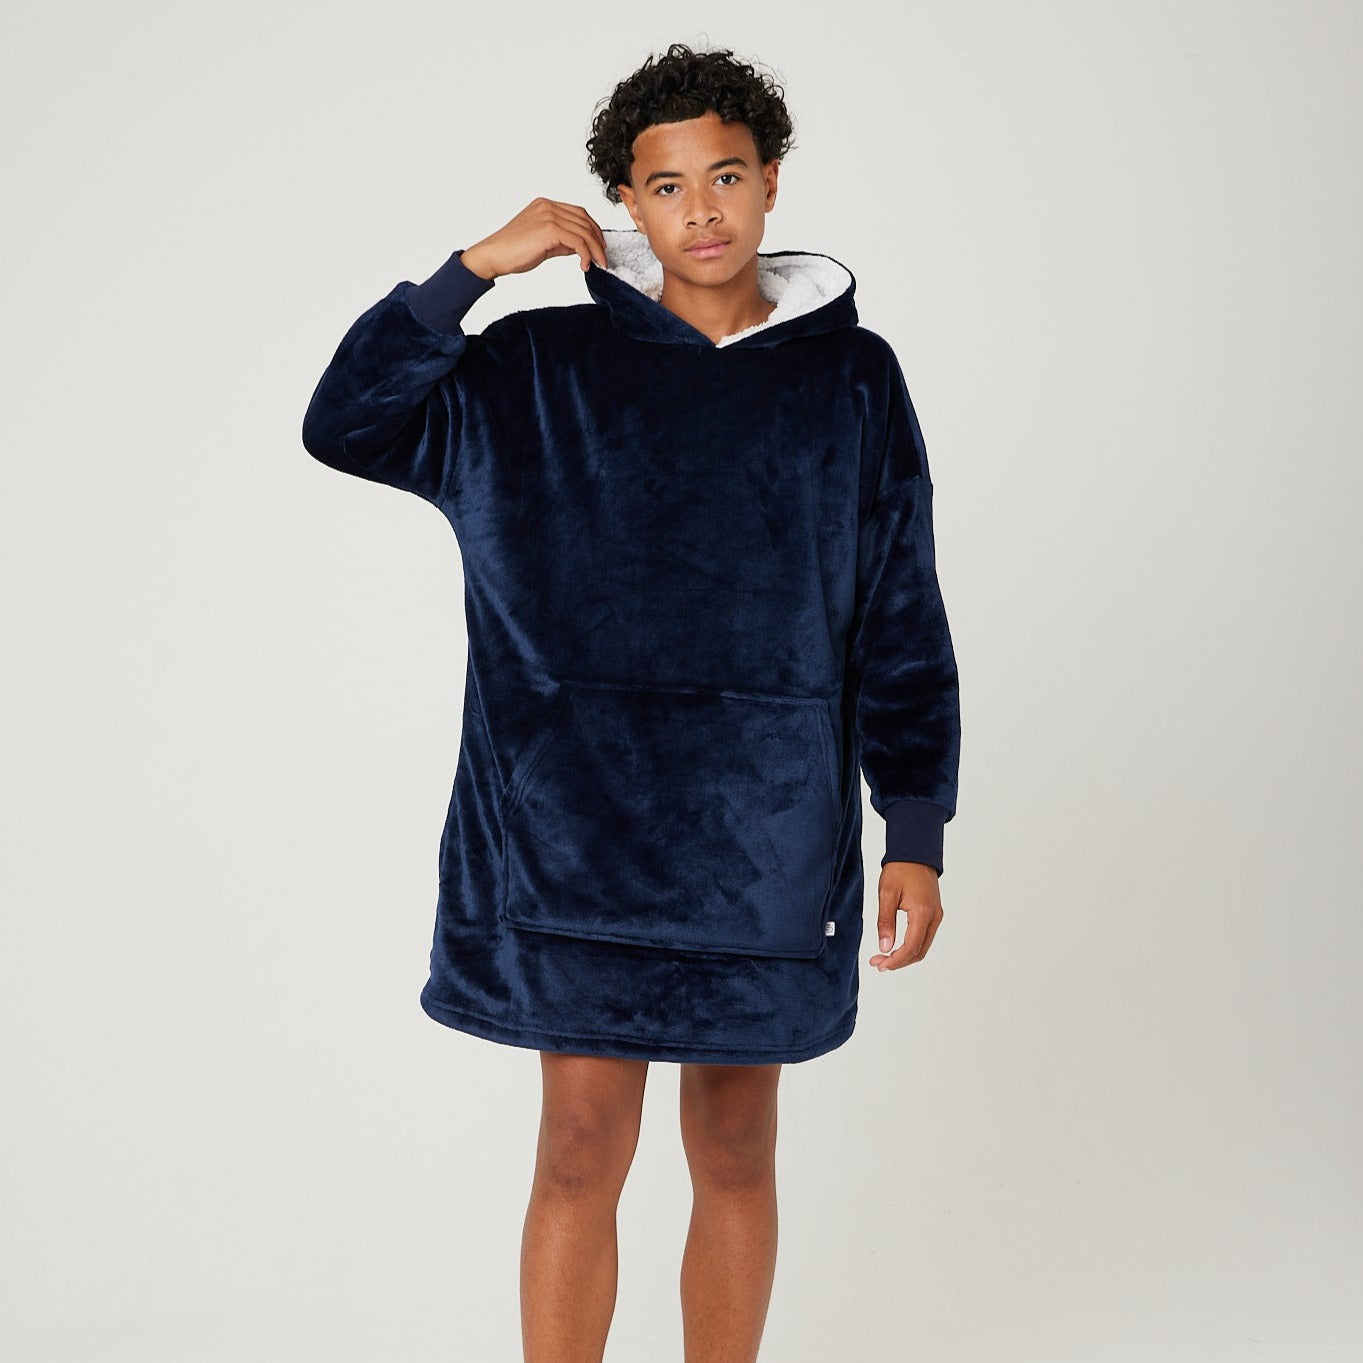 Sherpy For Kids Comfy Hoodie Wearable Blanket Navy Blue 